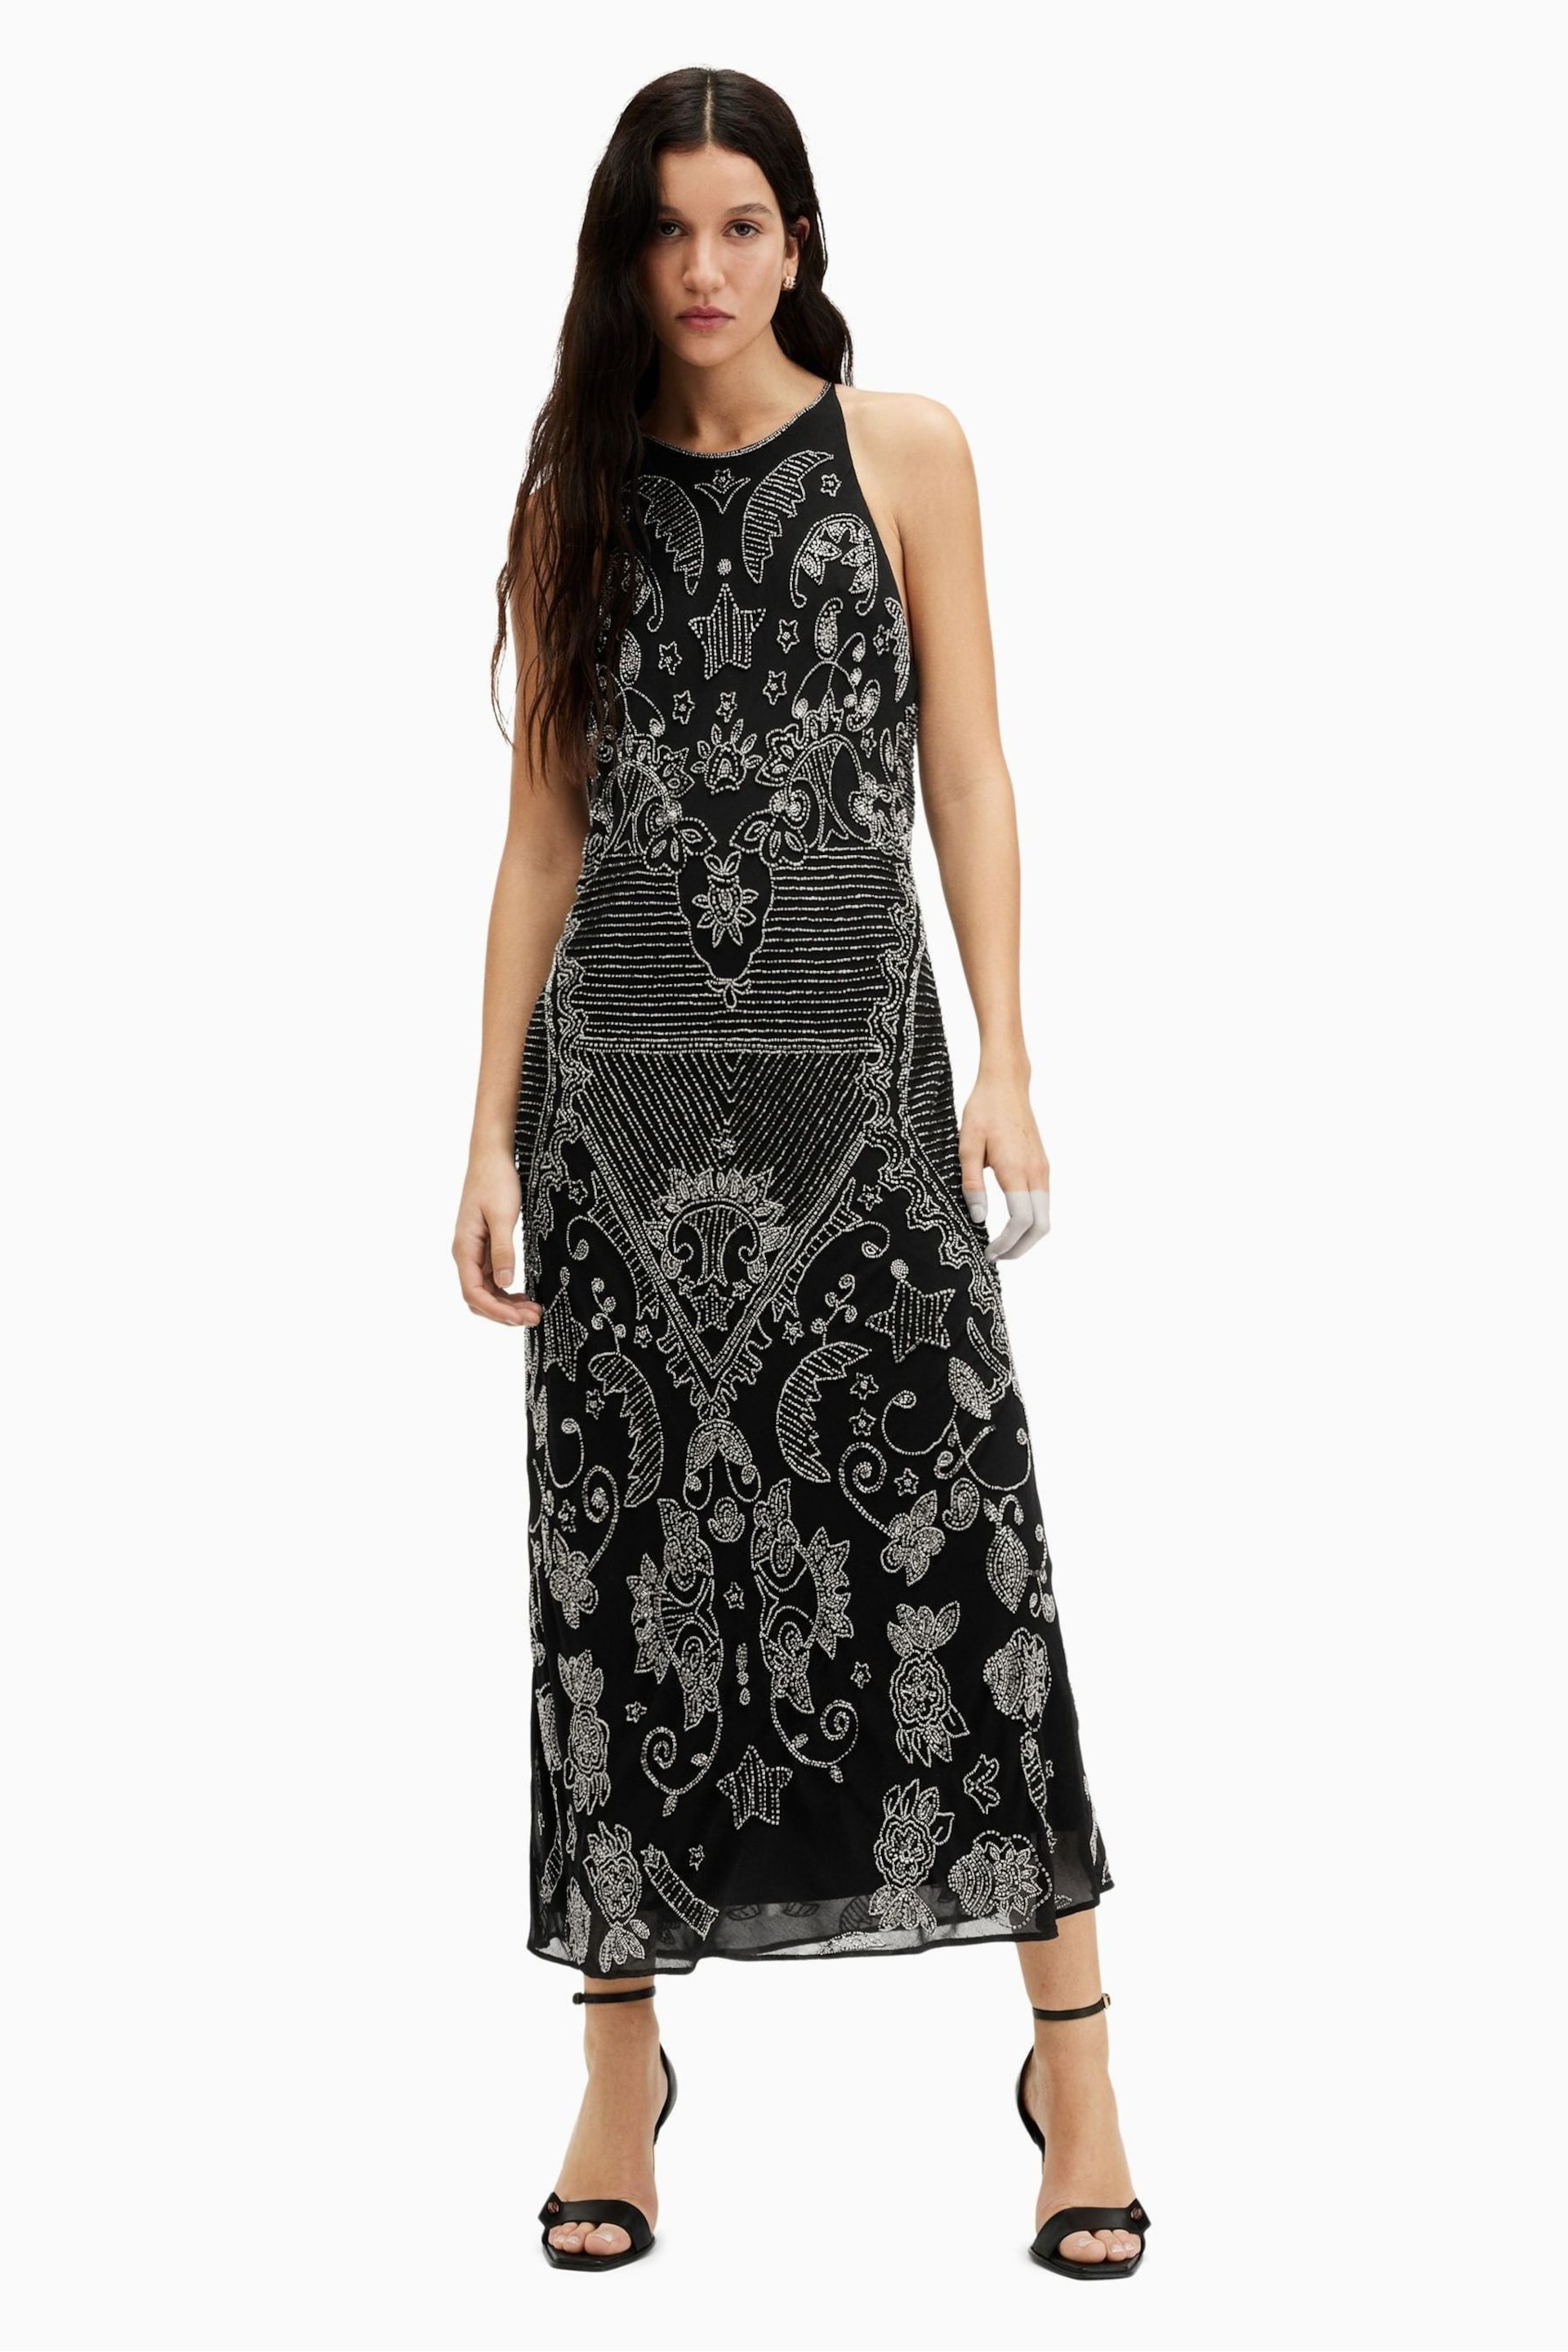 AllSaints Black Coralie Emb Dress - Image 5 of 7